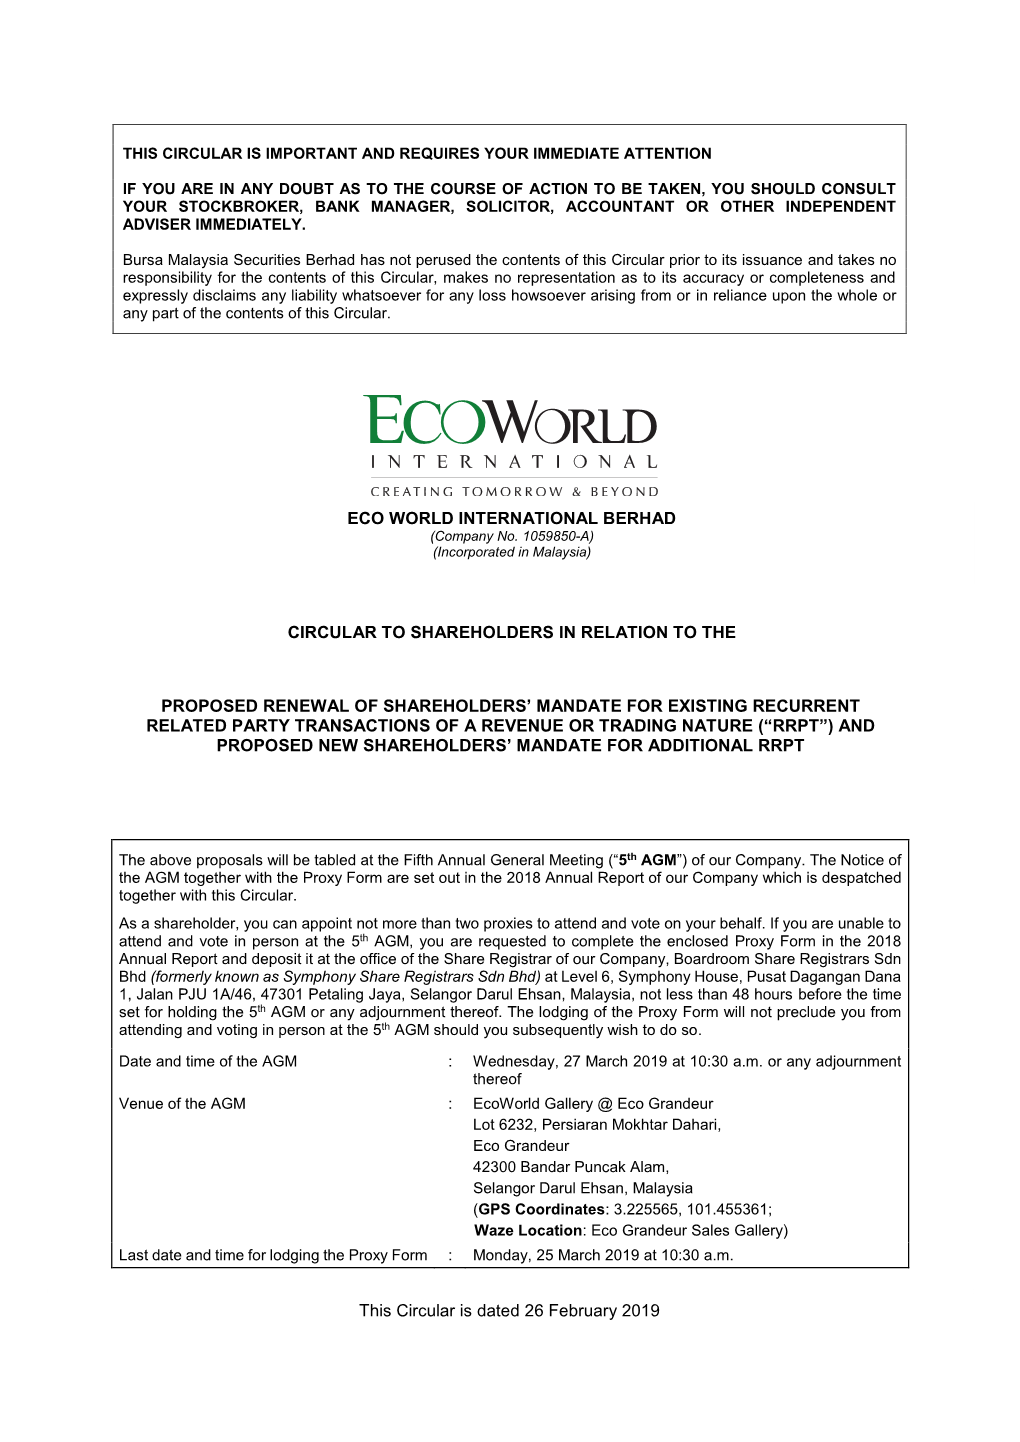 Eco World International Berhad Circular To